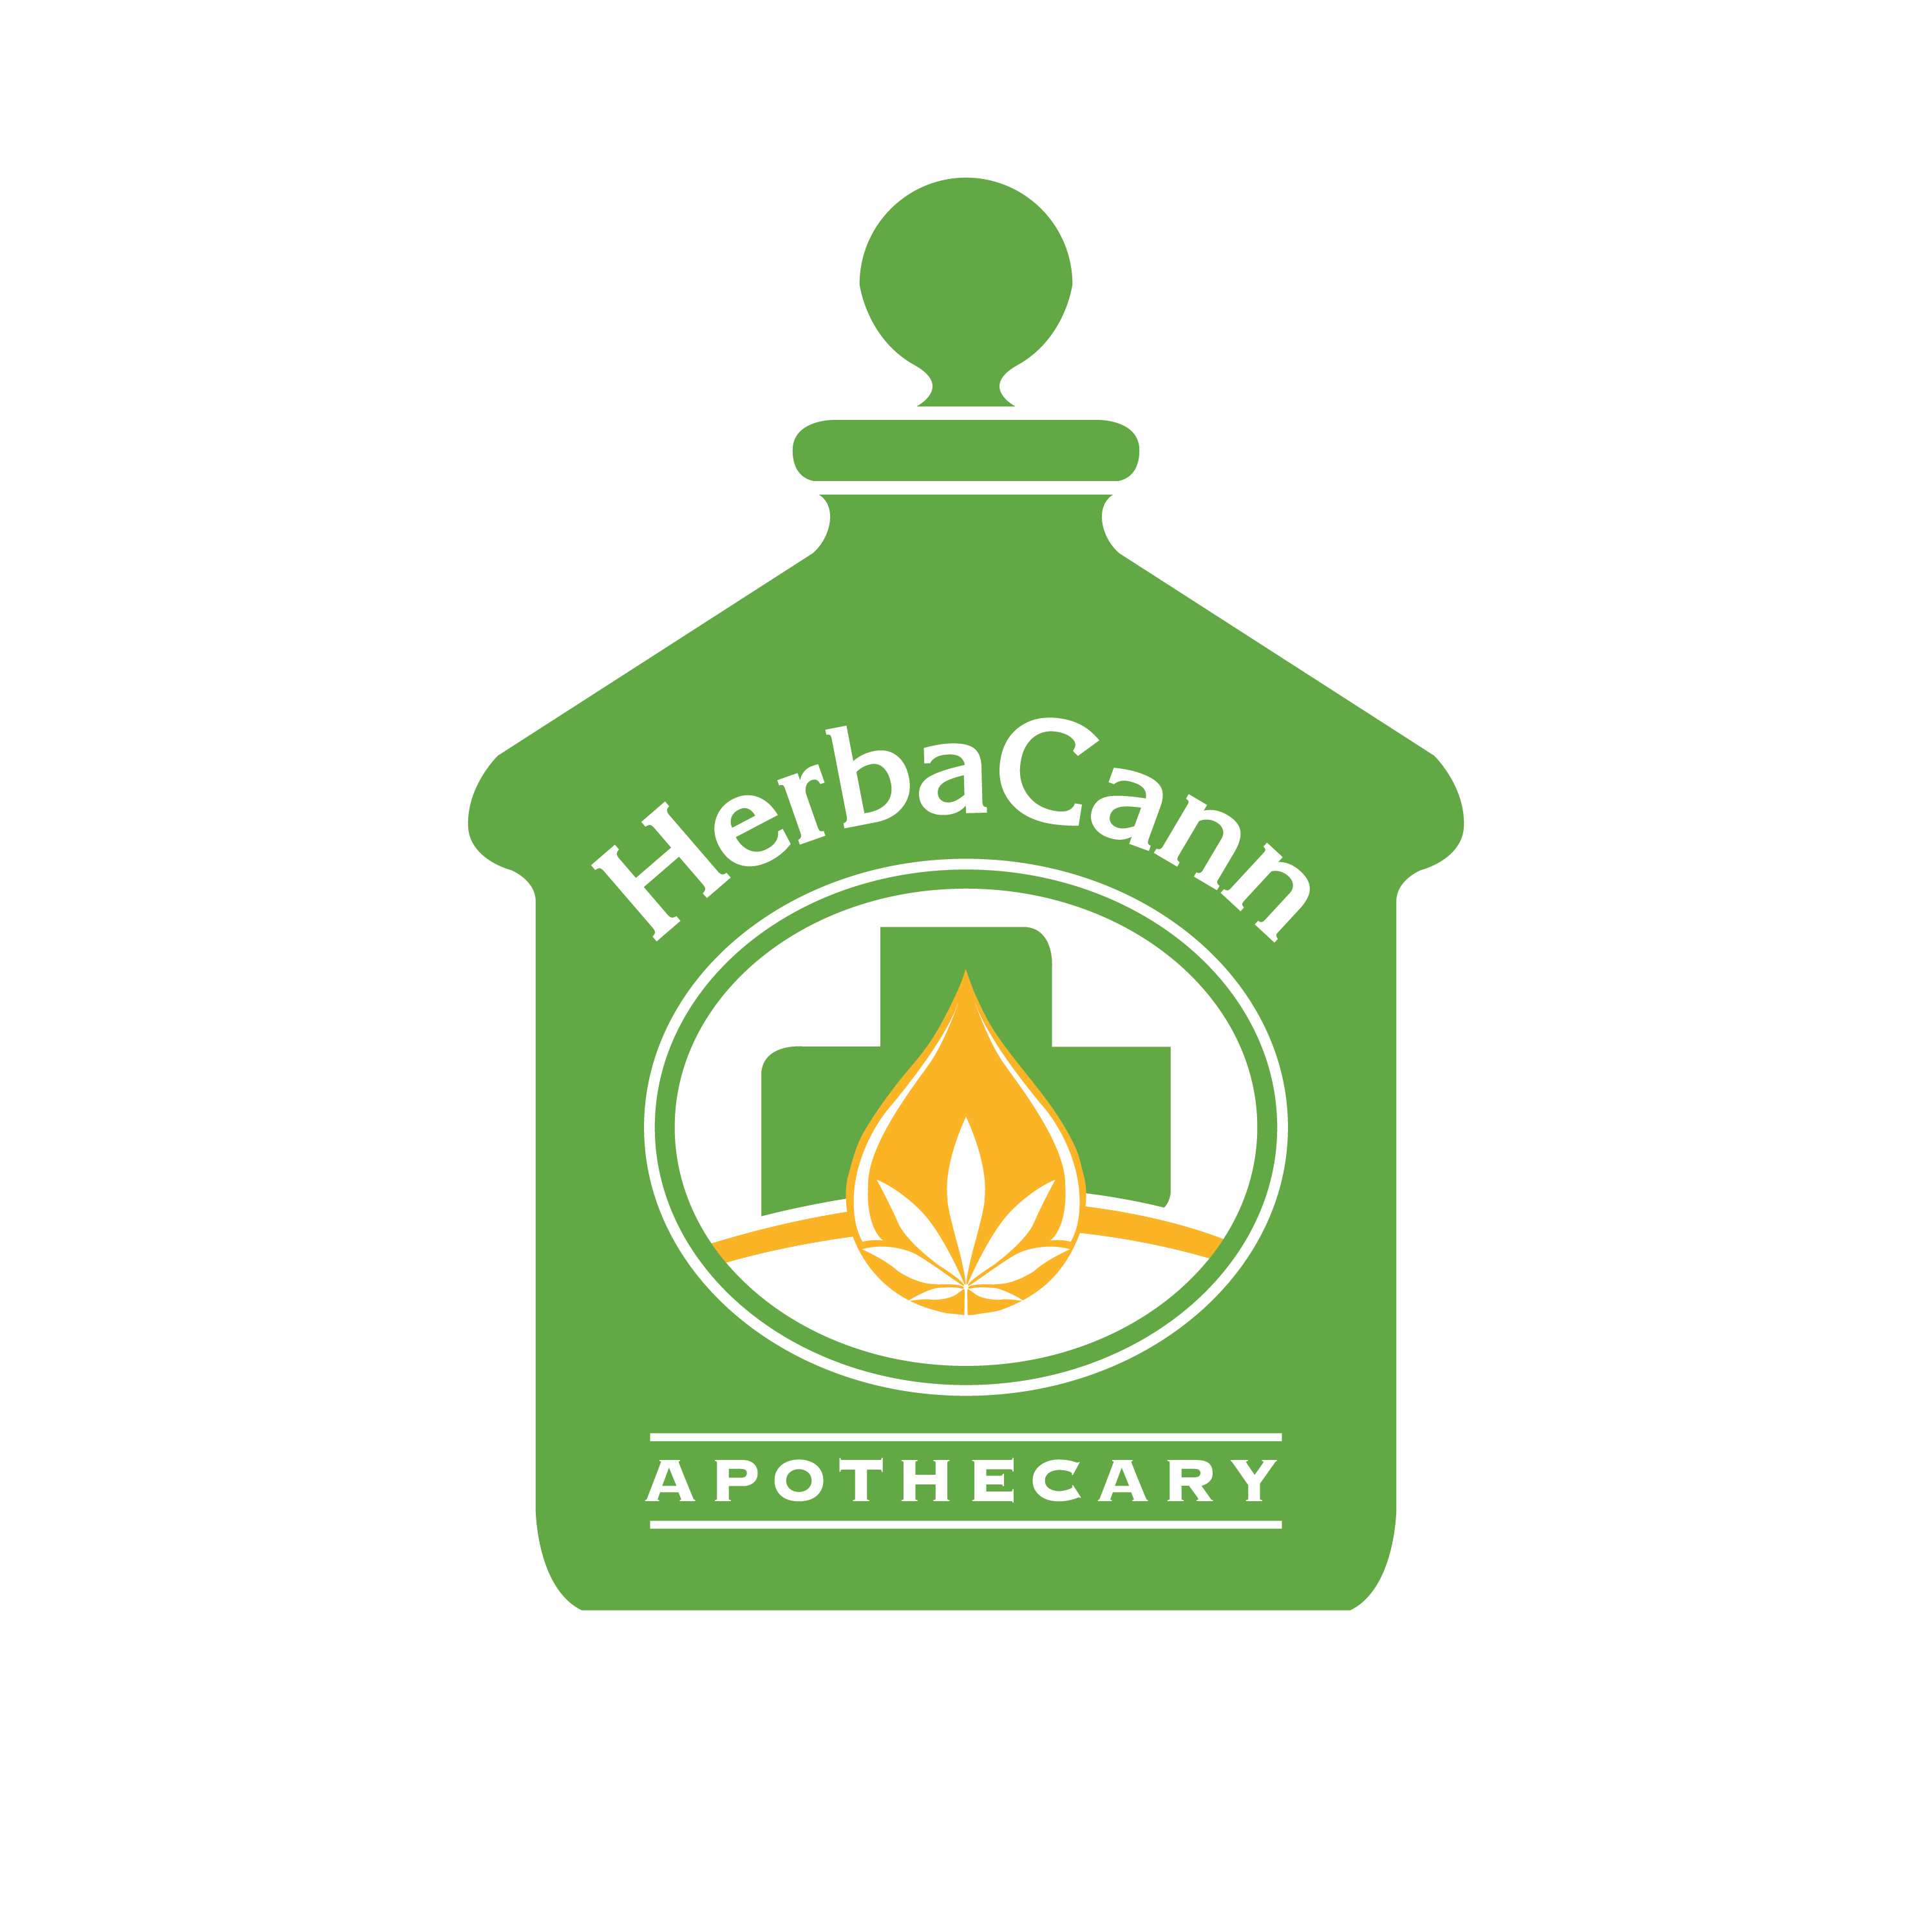 HerbaCann Apothecary - Medical Marijuana Doctors - Cannabizme.com